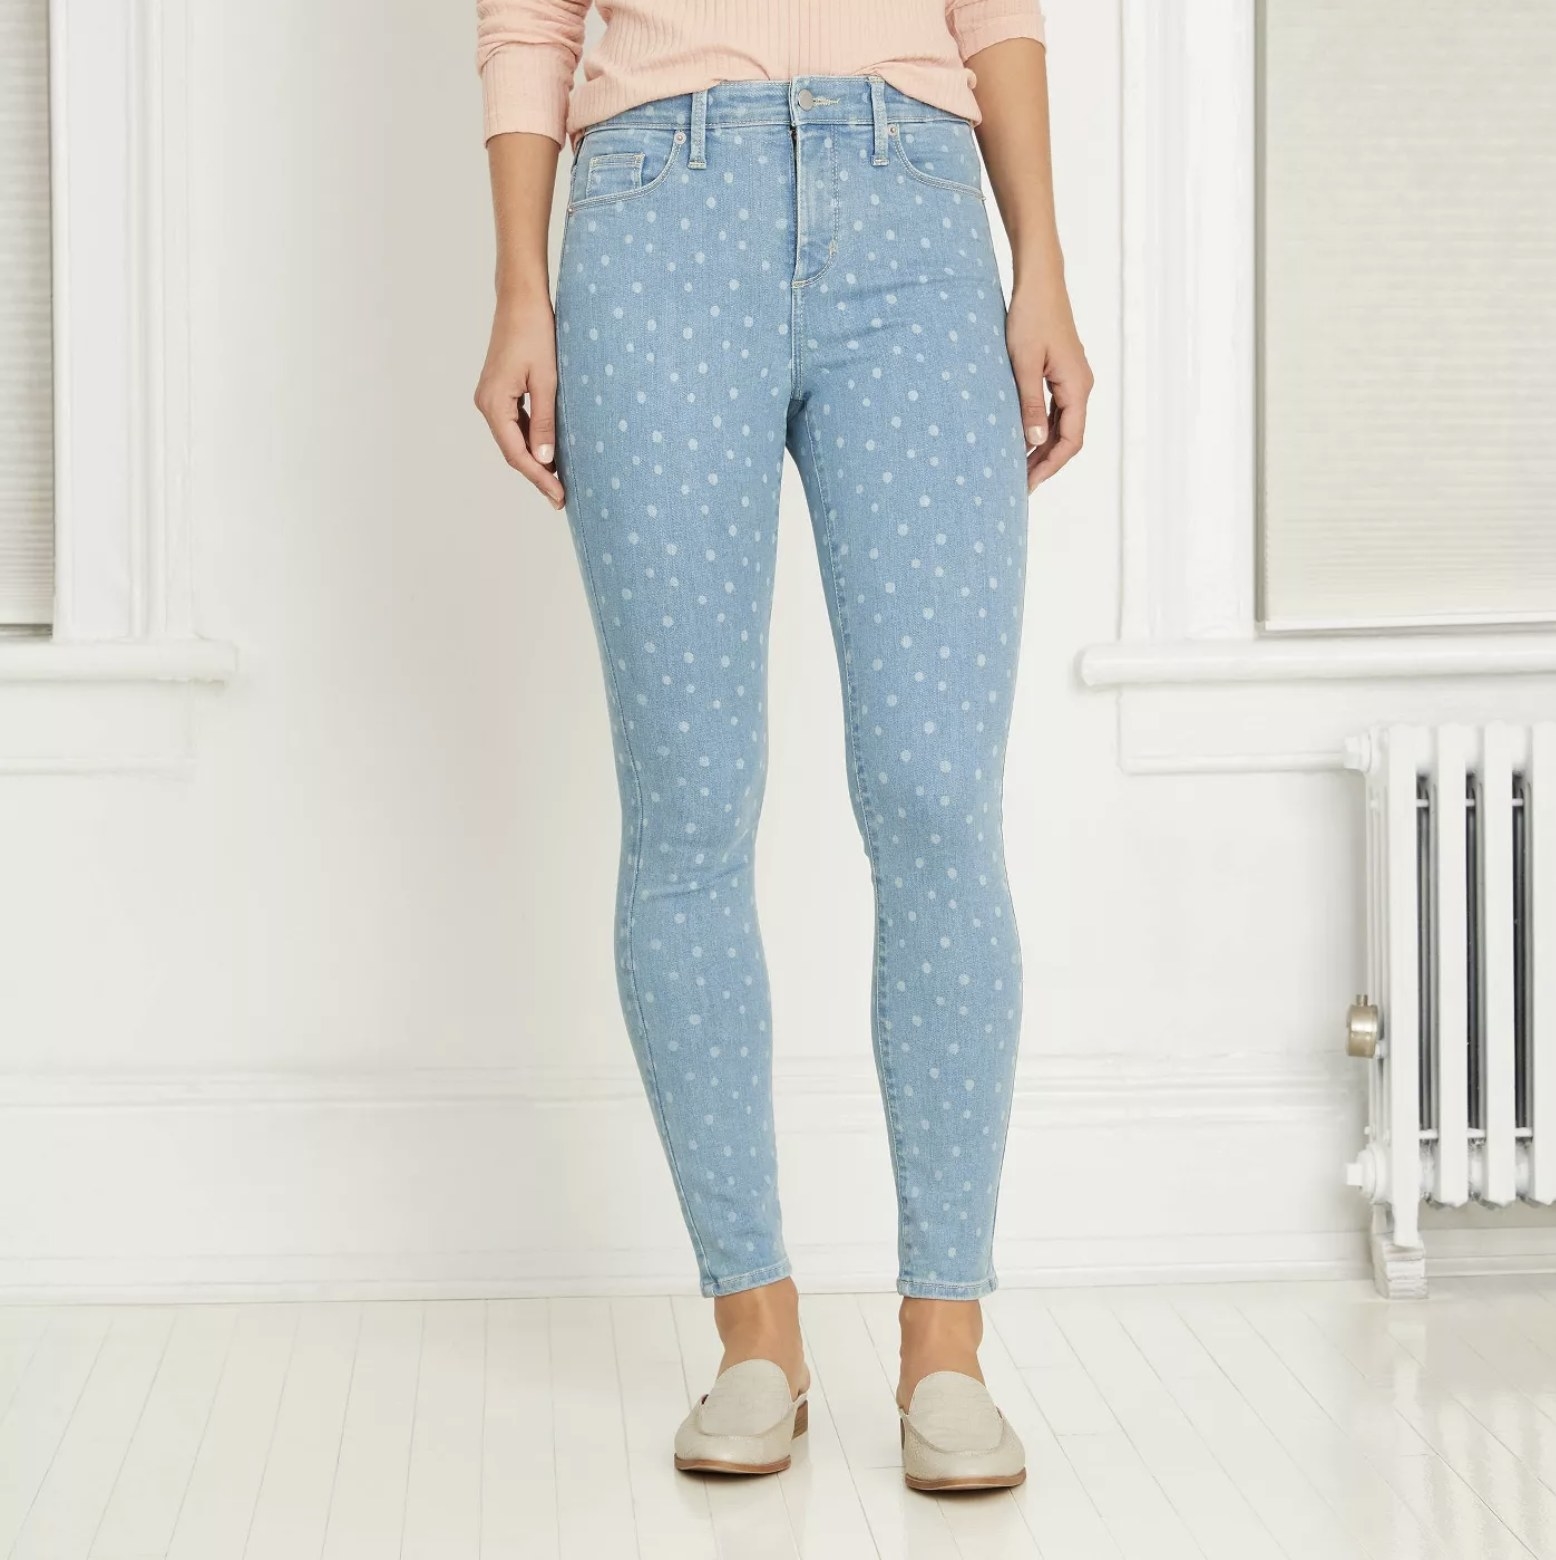 Model wears polka-dot light blue jeans with metallic slides